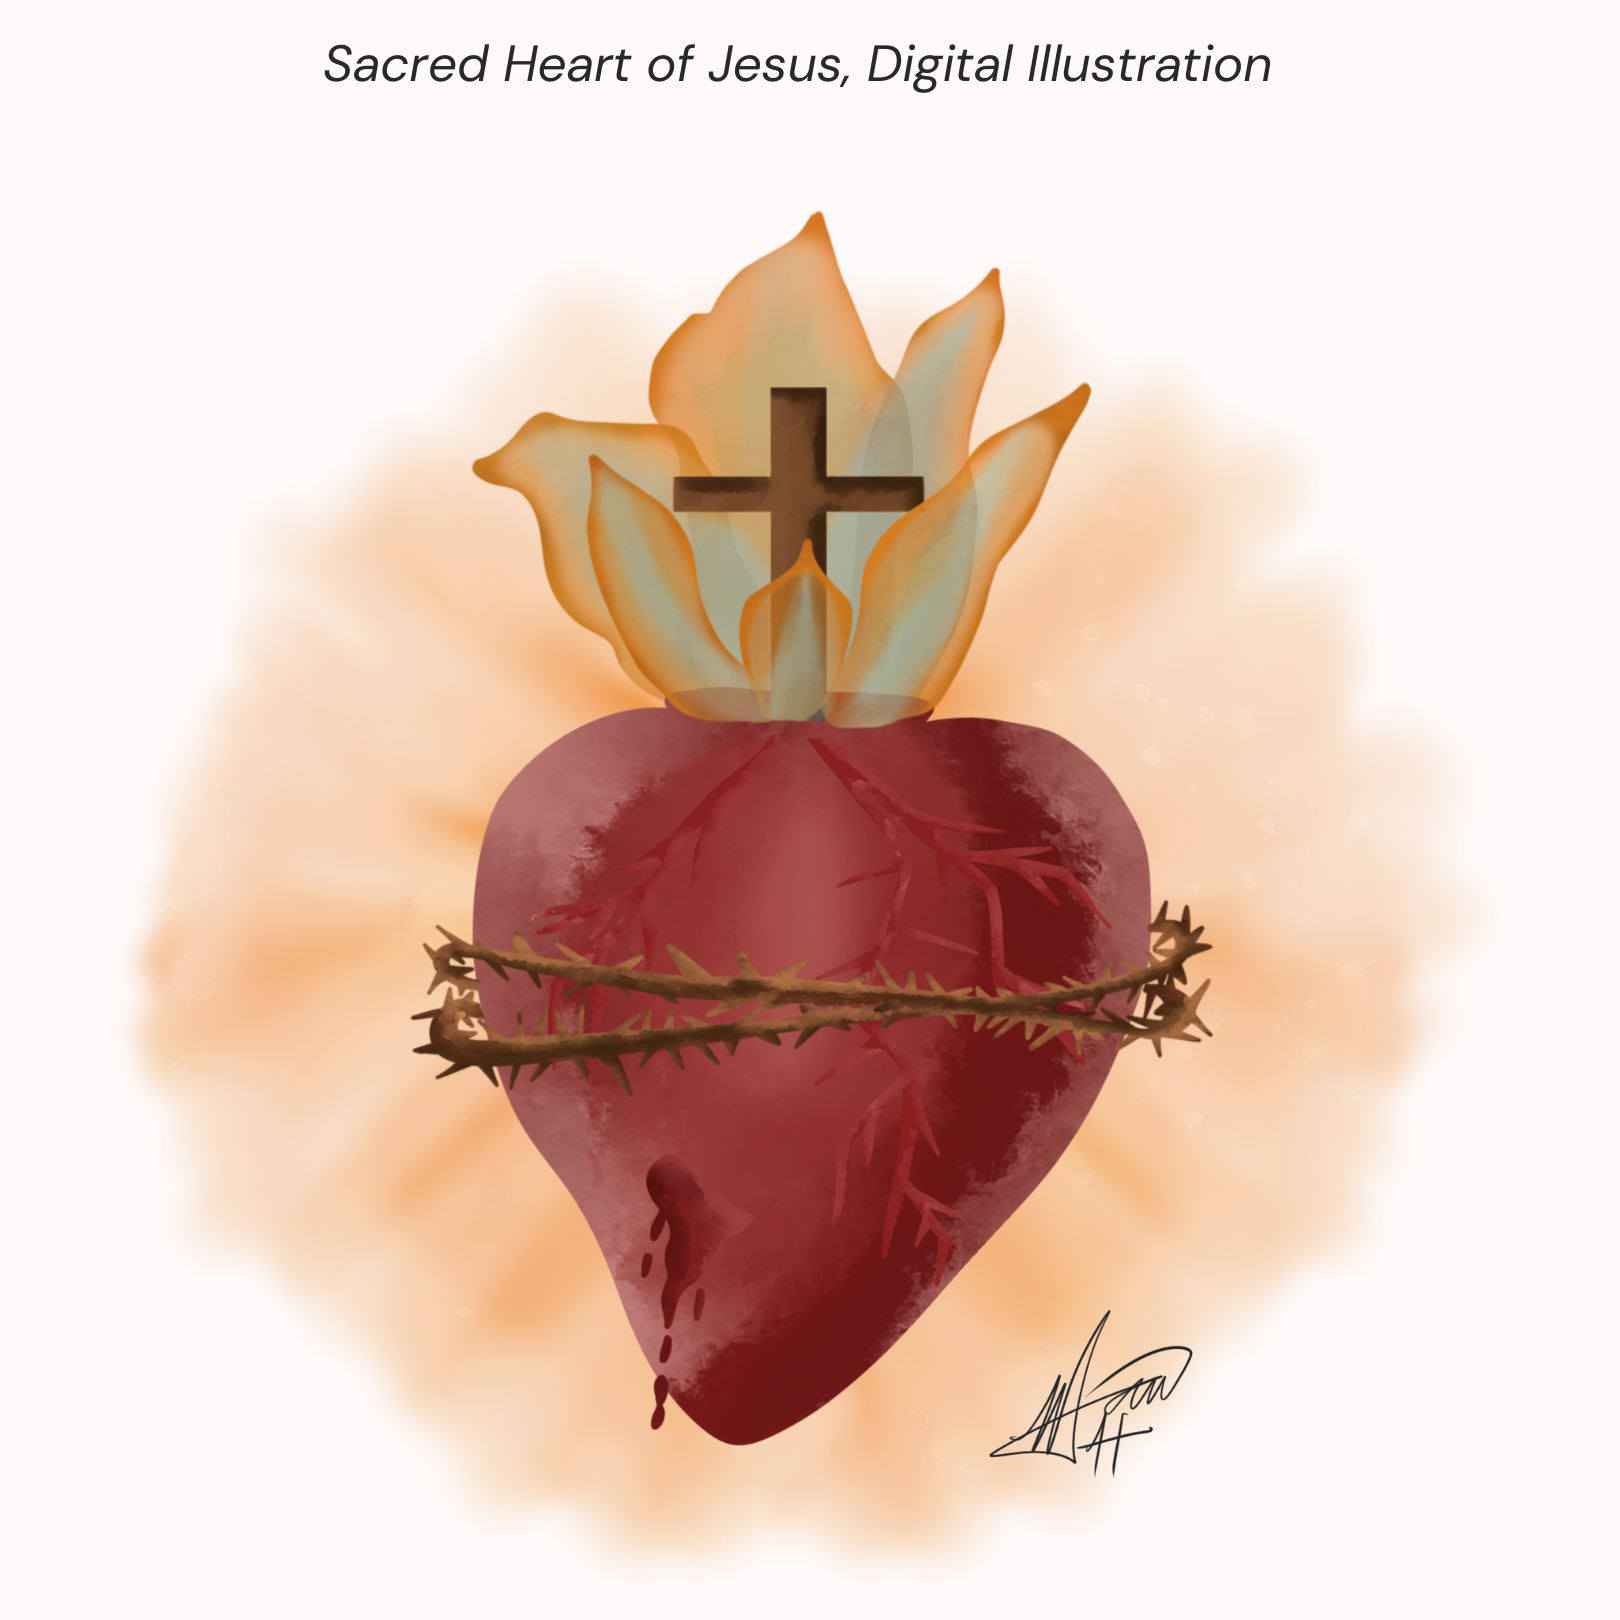 Digital Watercolor Illustration of the Sacred Heart of Jesus